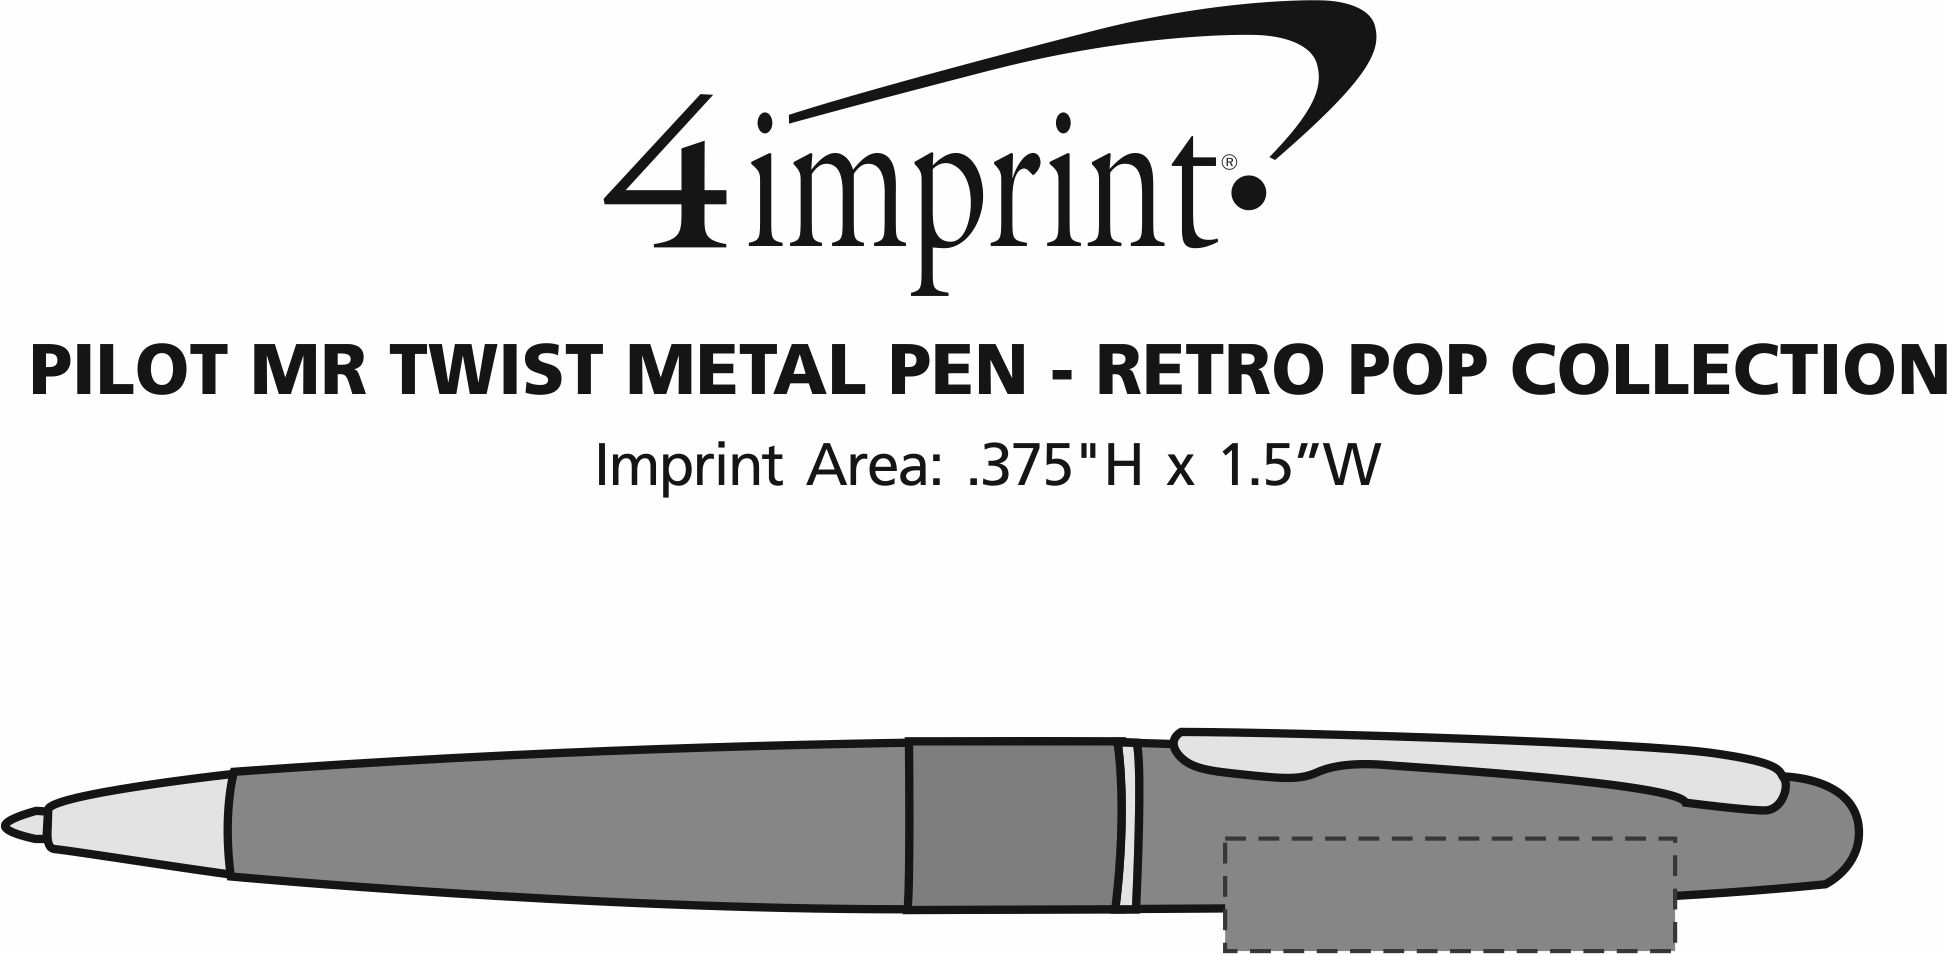 Imprint Area of Pilot MR Twist Metal Pen - Retro Pop Collection